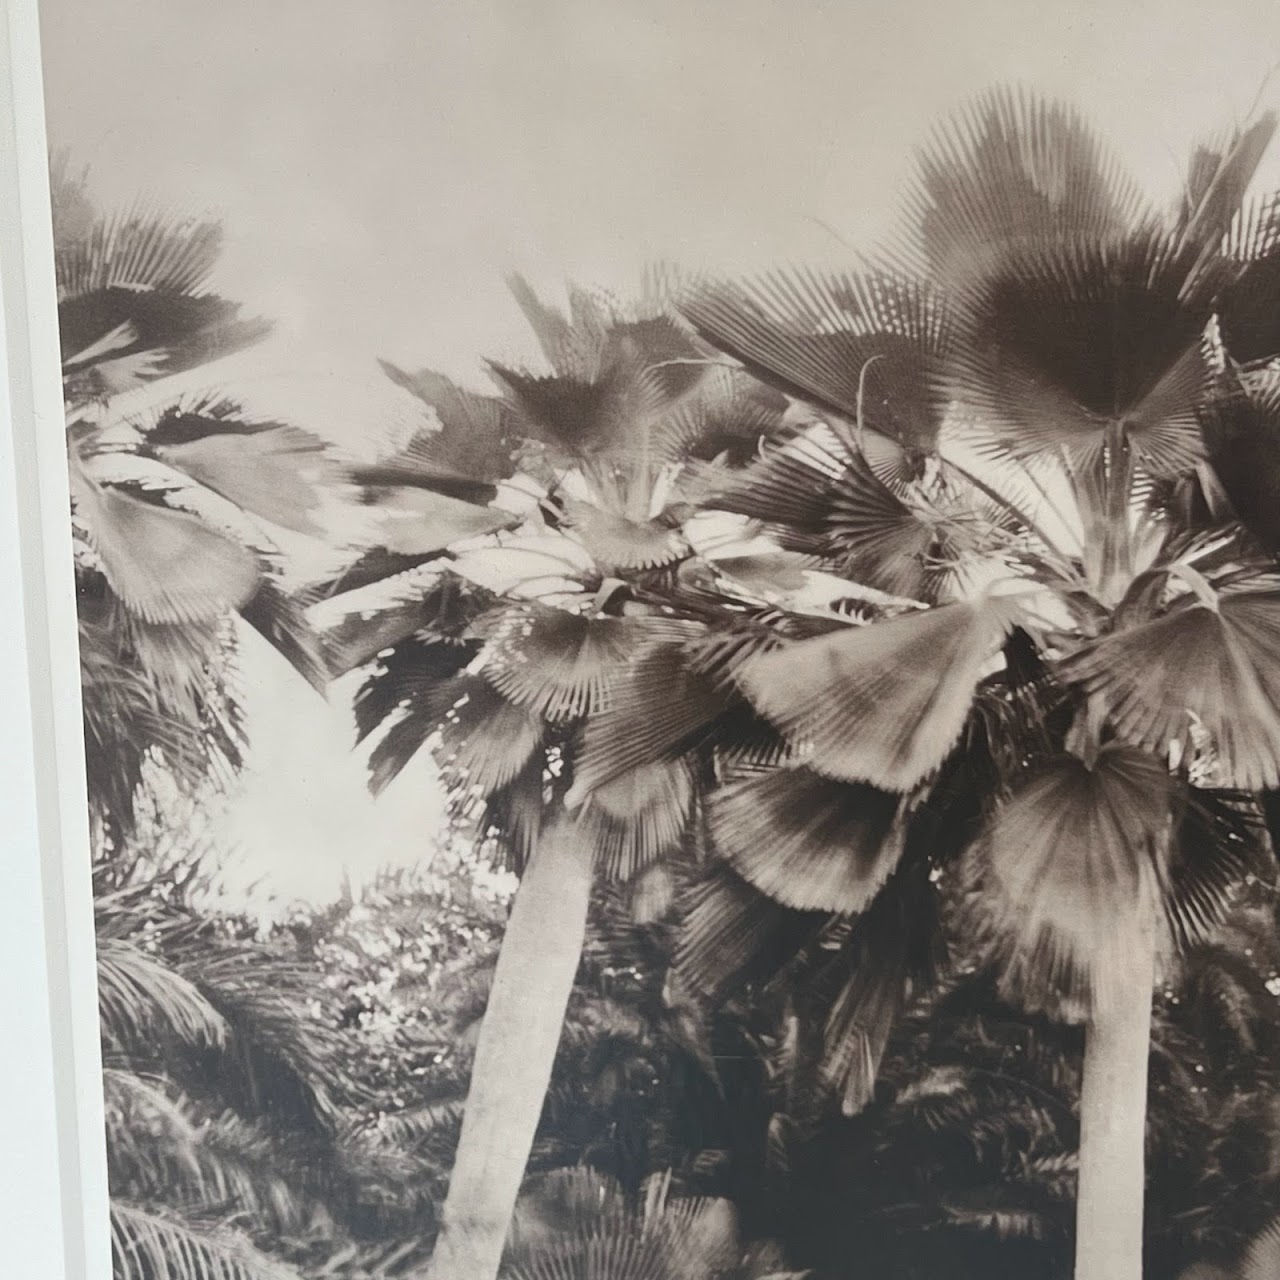 Jose Picayo 'Bailey Palm' Silver Gelatin Photograph